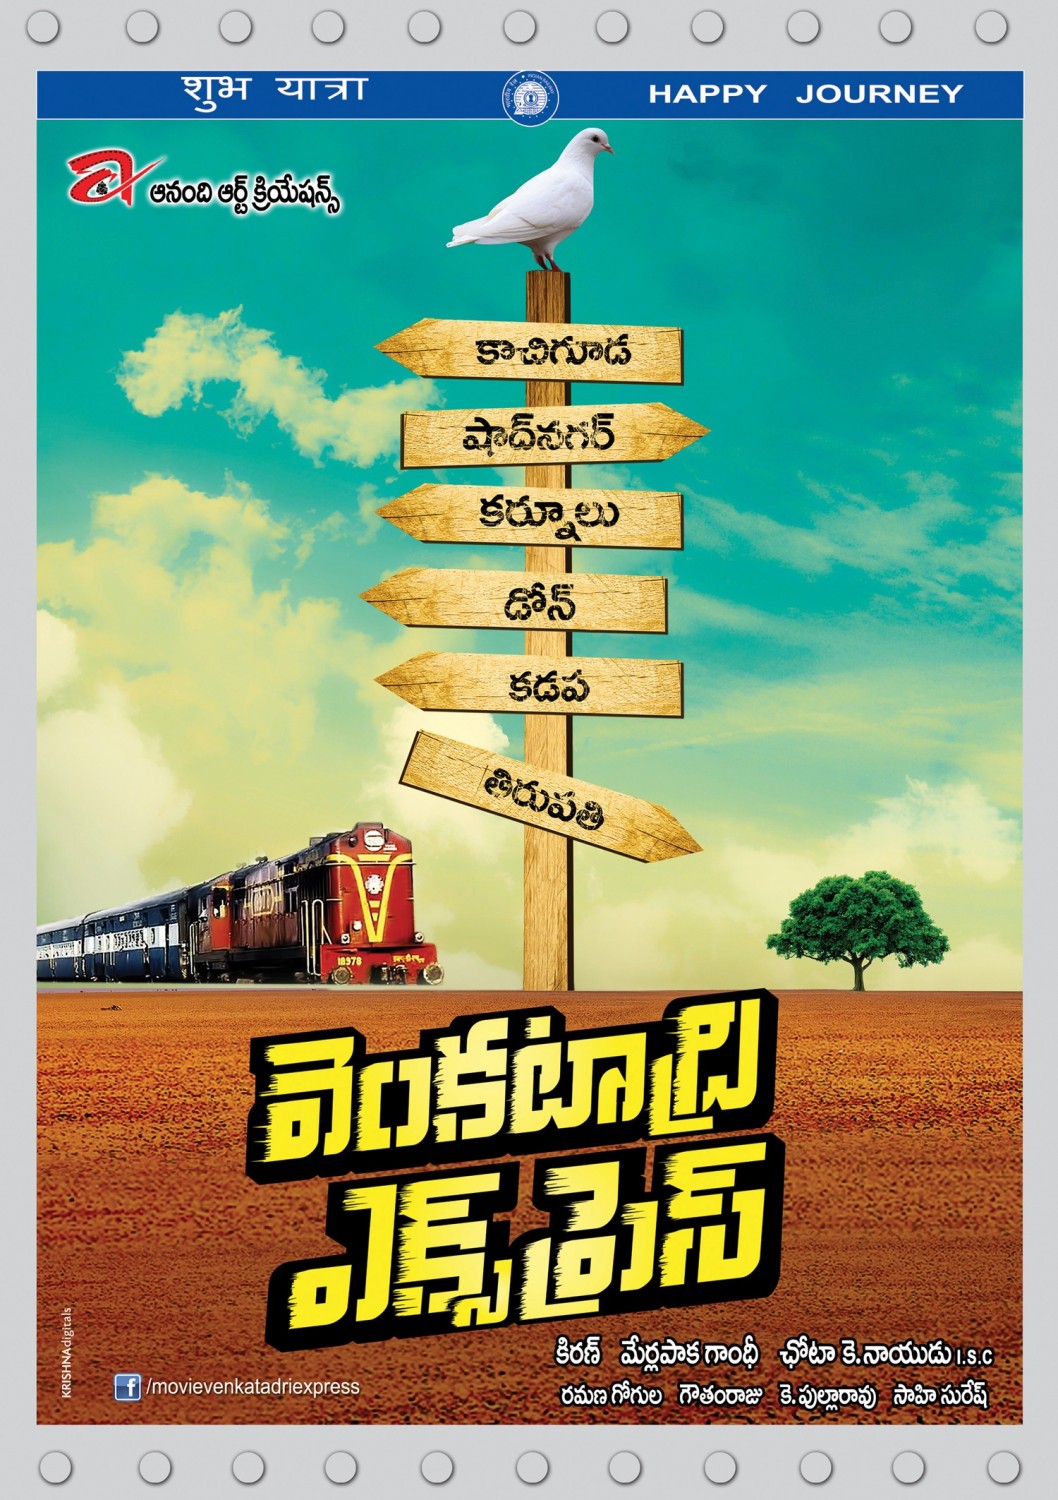 Extra Large Movie Poster Image for Venkatadri Express (#5 of 17)